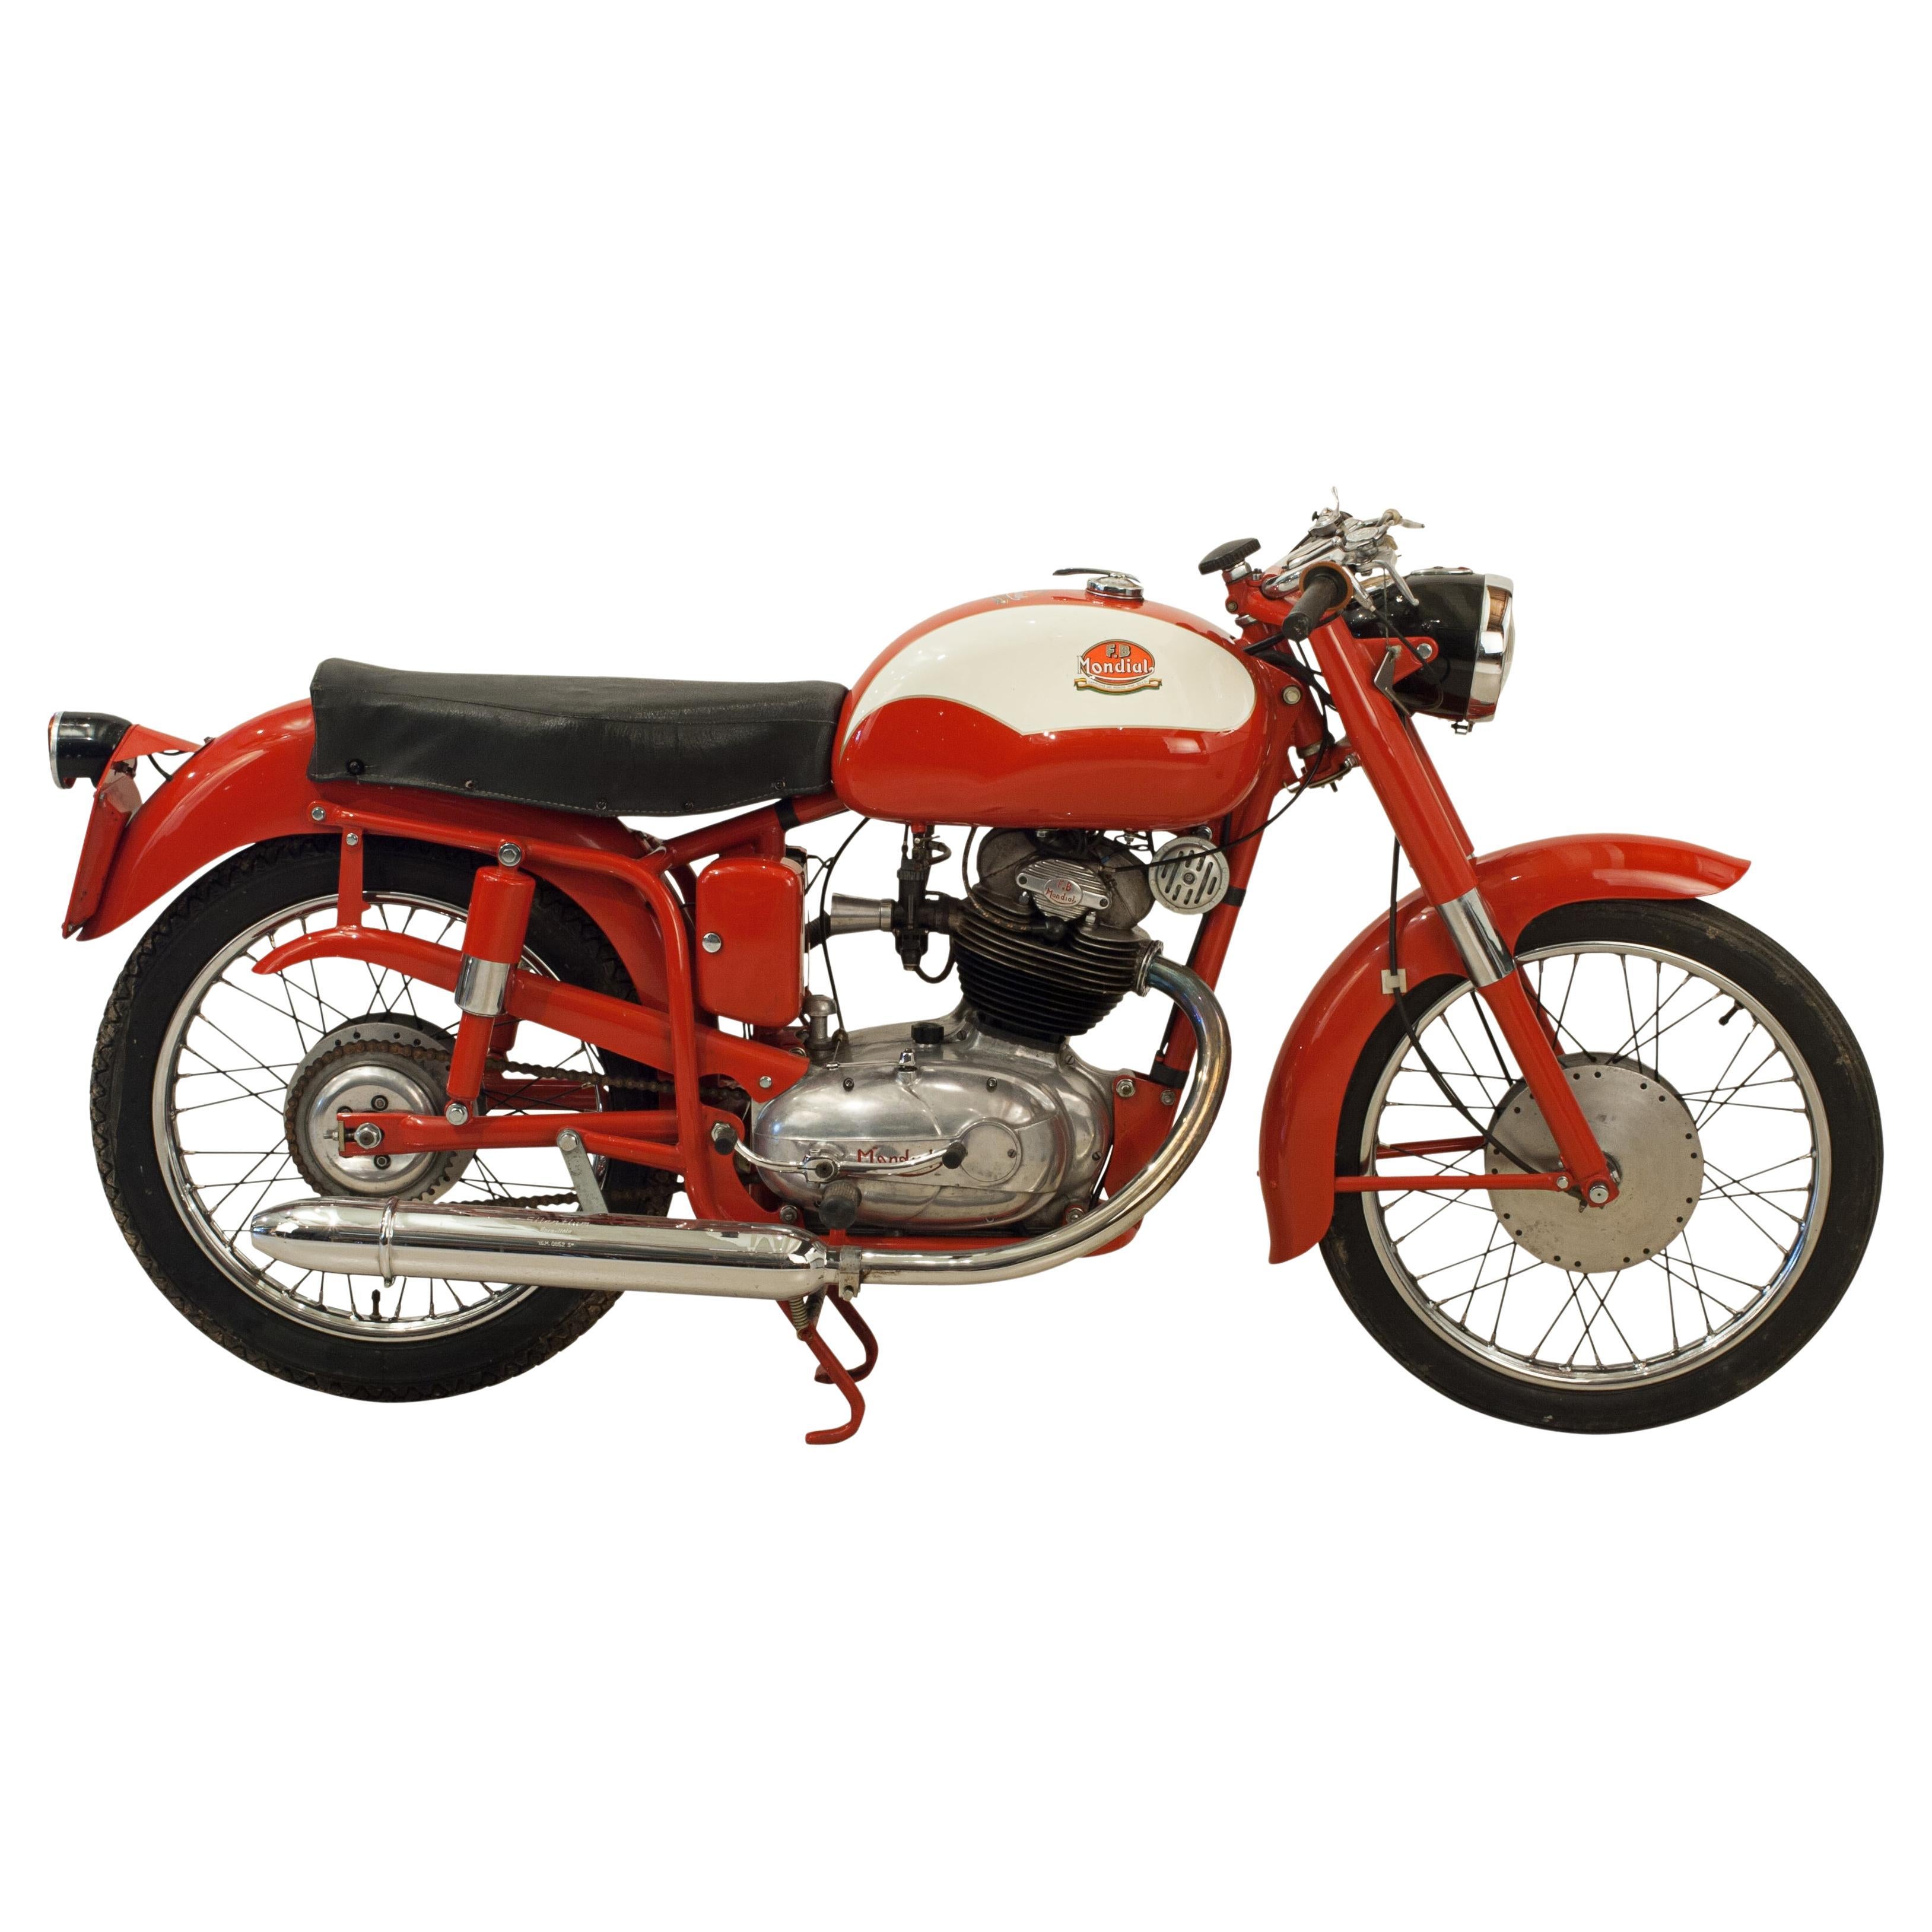 Italian Motorcycle, Mondial 1960 Sprint, Classic Motorbike.